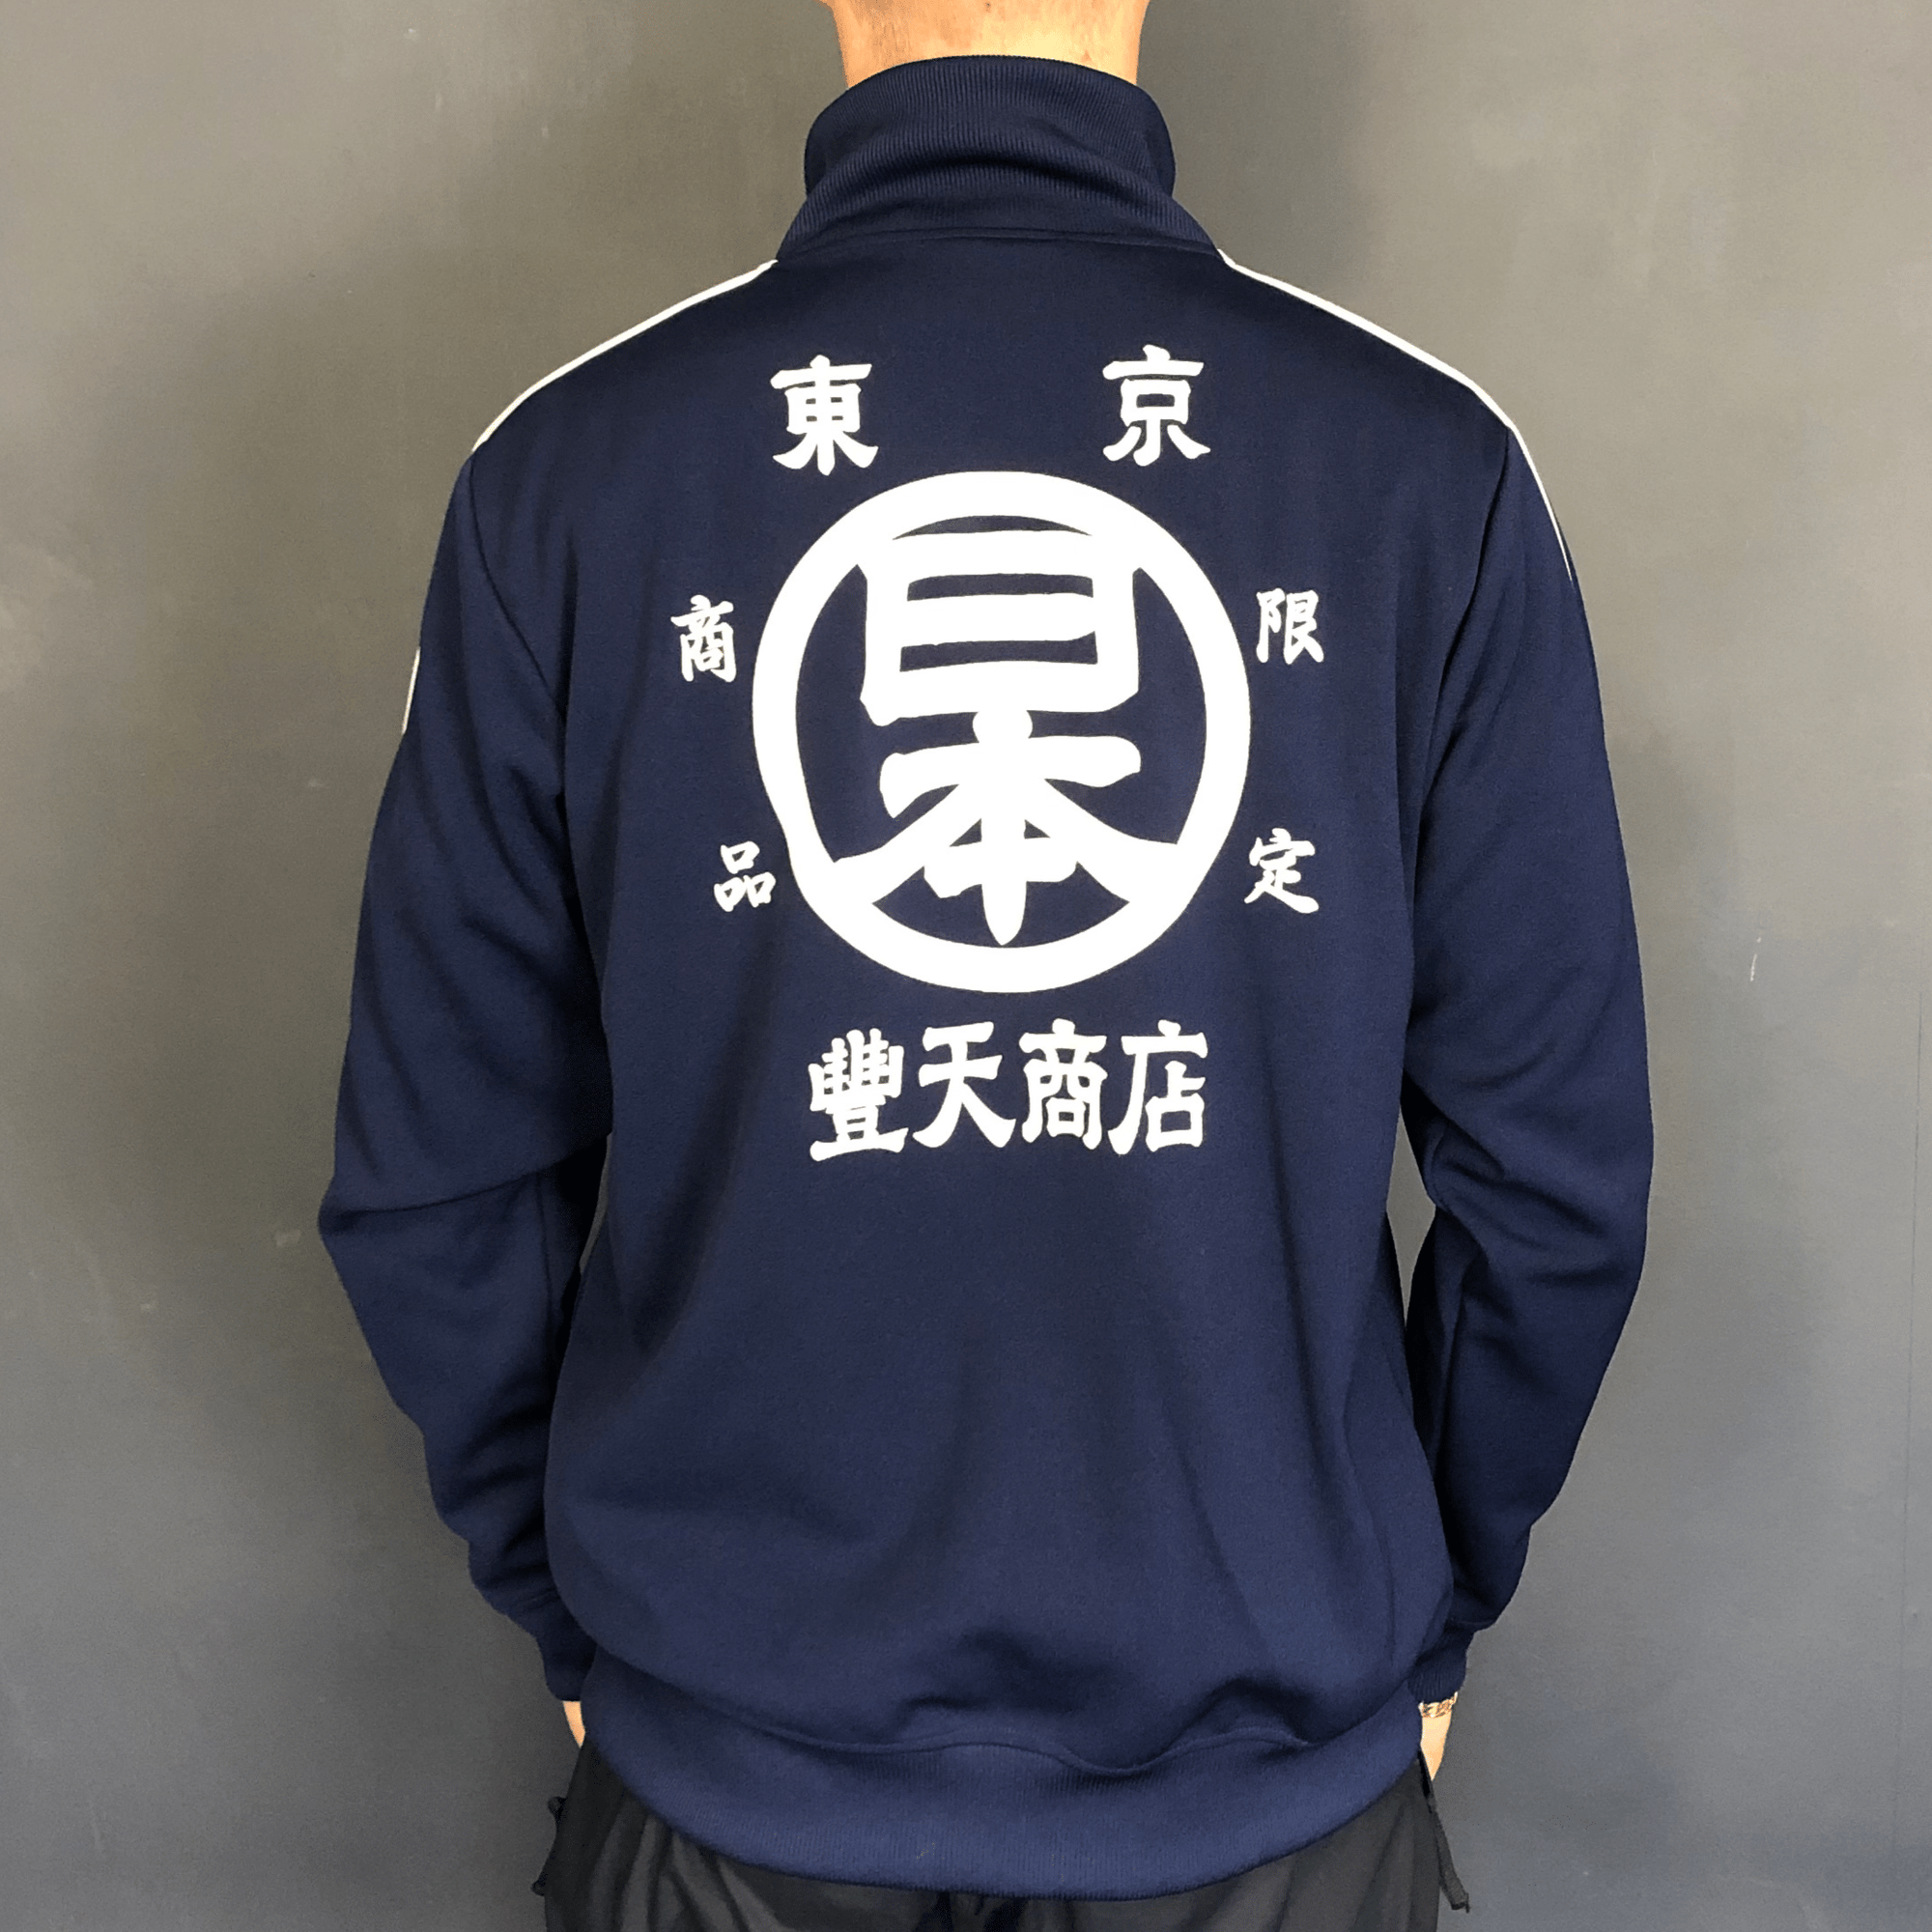 Vintage Japanese Print Track Jacket - Large - Vintique Clothing